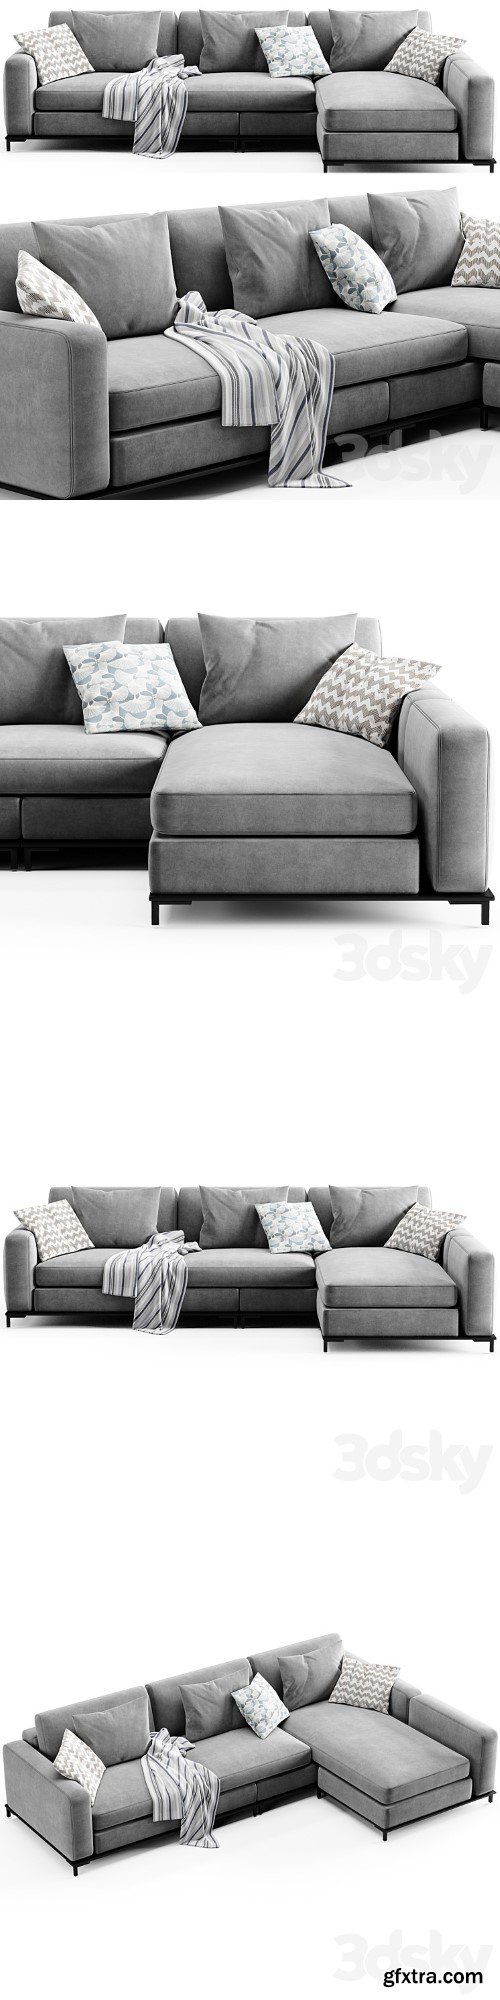 boconcept sofa